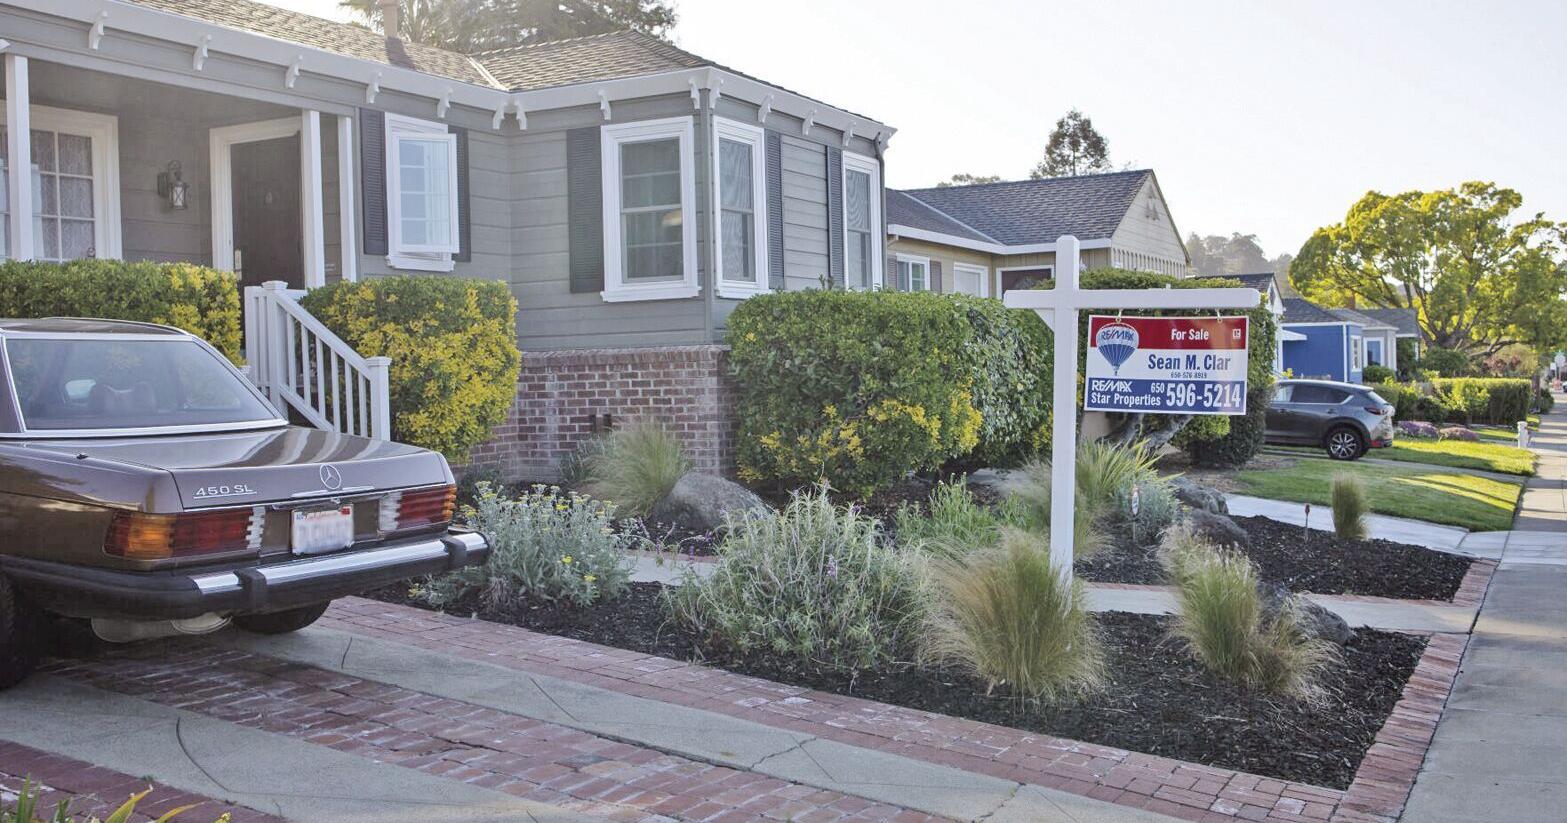 San Mateo County adopts housing plan